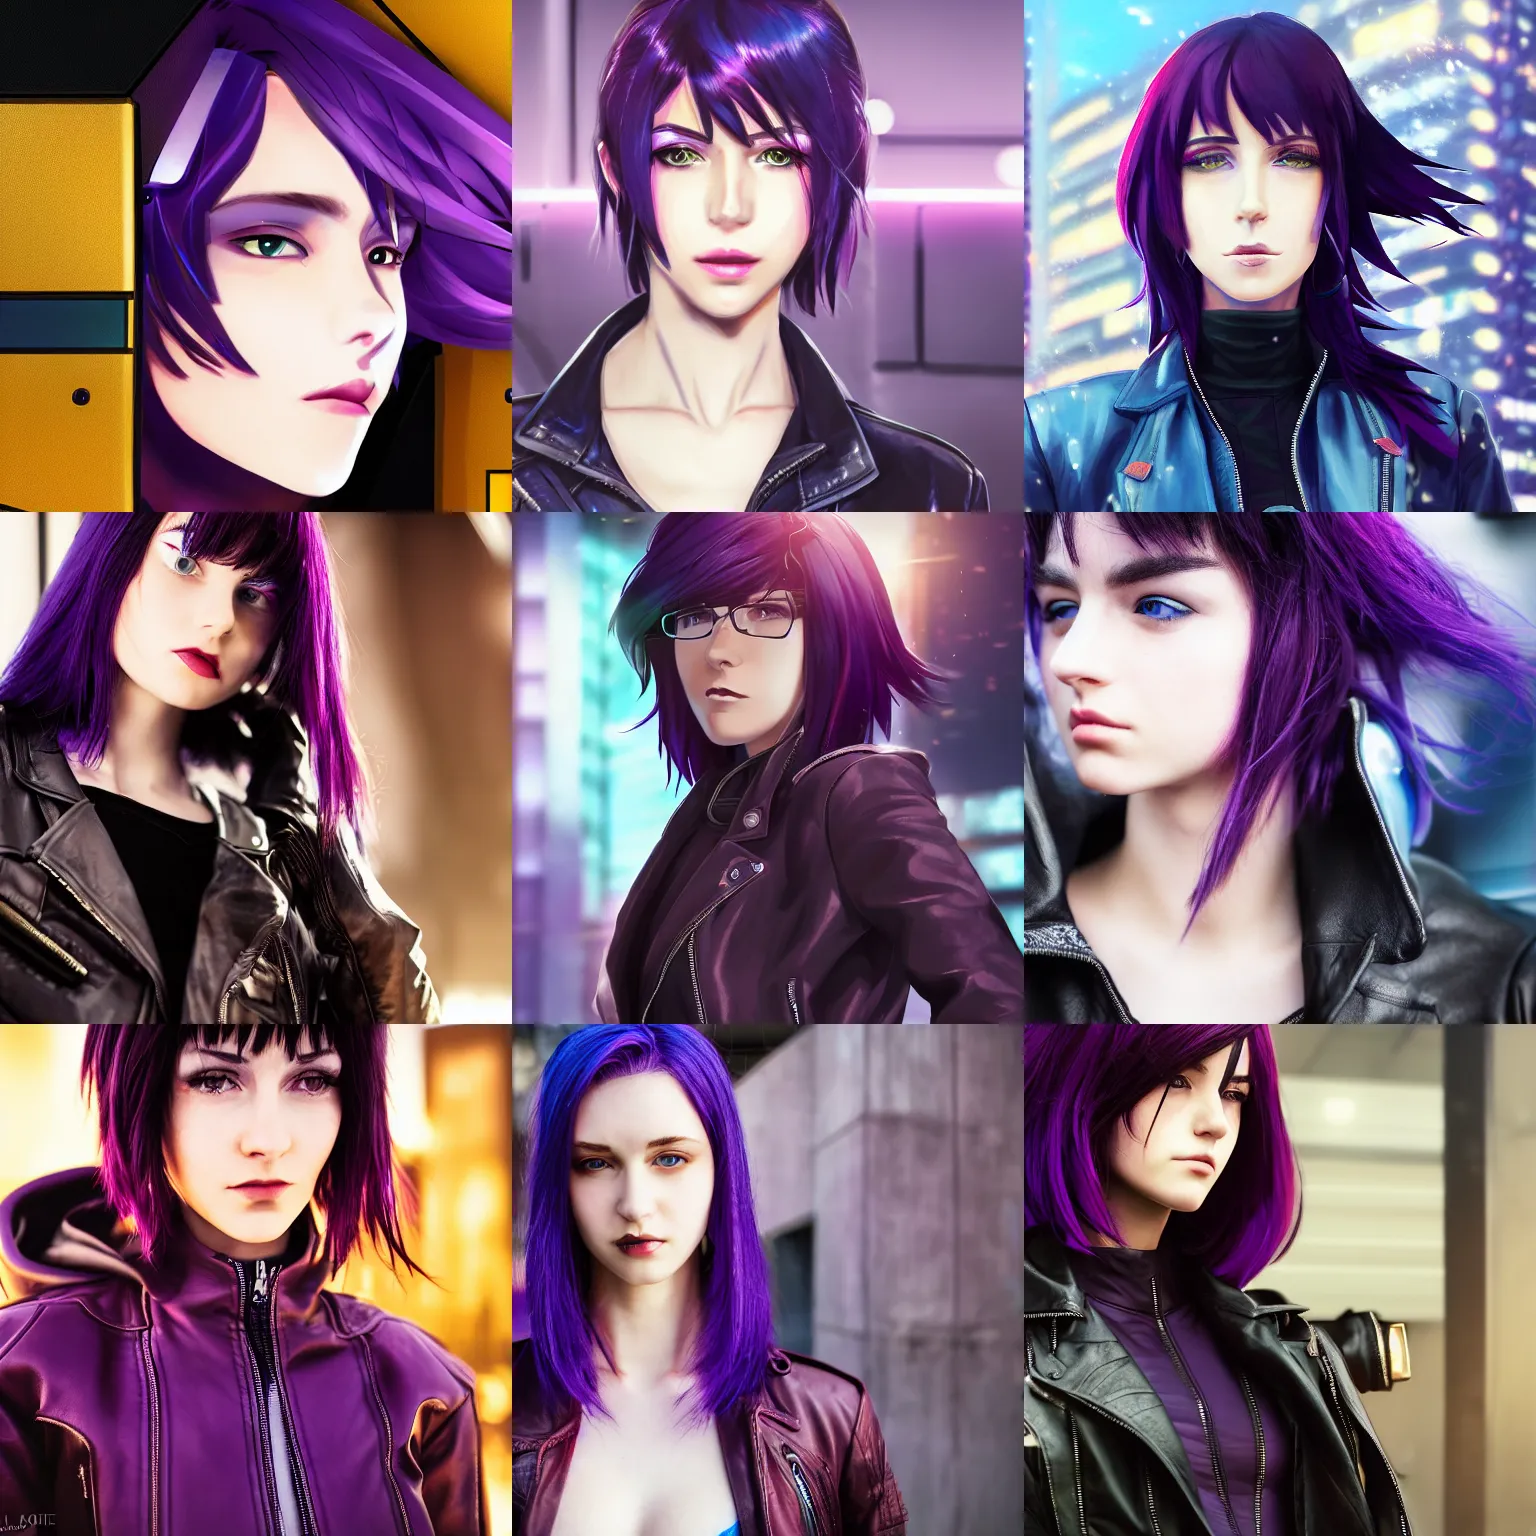 Prompt: close up portrait of a caucasian young cyberpunk woman, dark purple hair, cybernetics, leather jacket, vibrant dynamic portrait by makoto shinkai